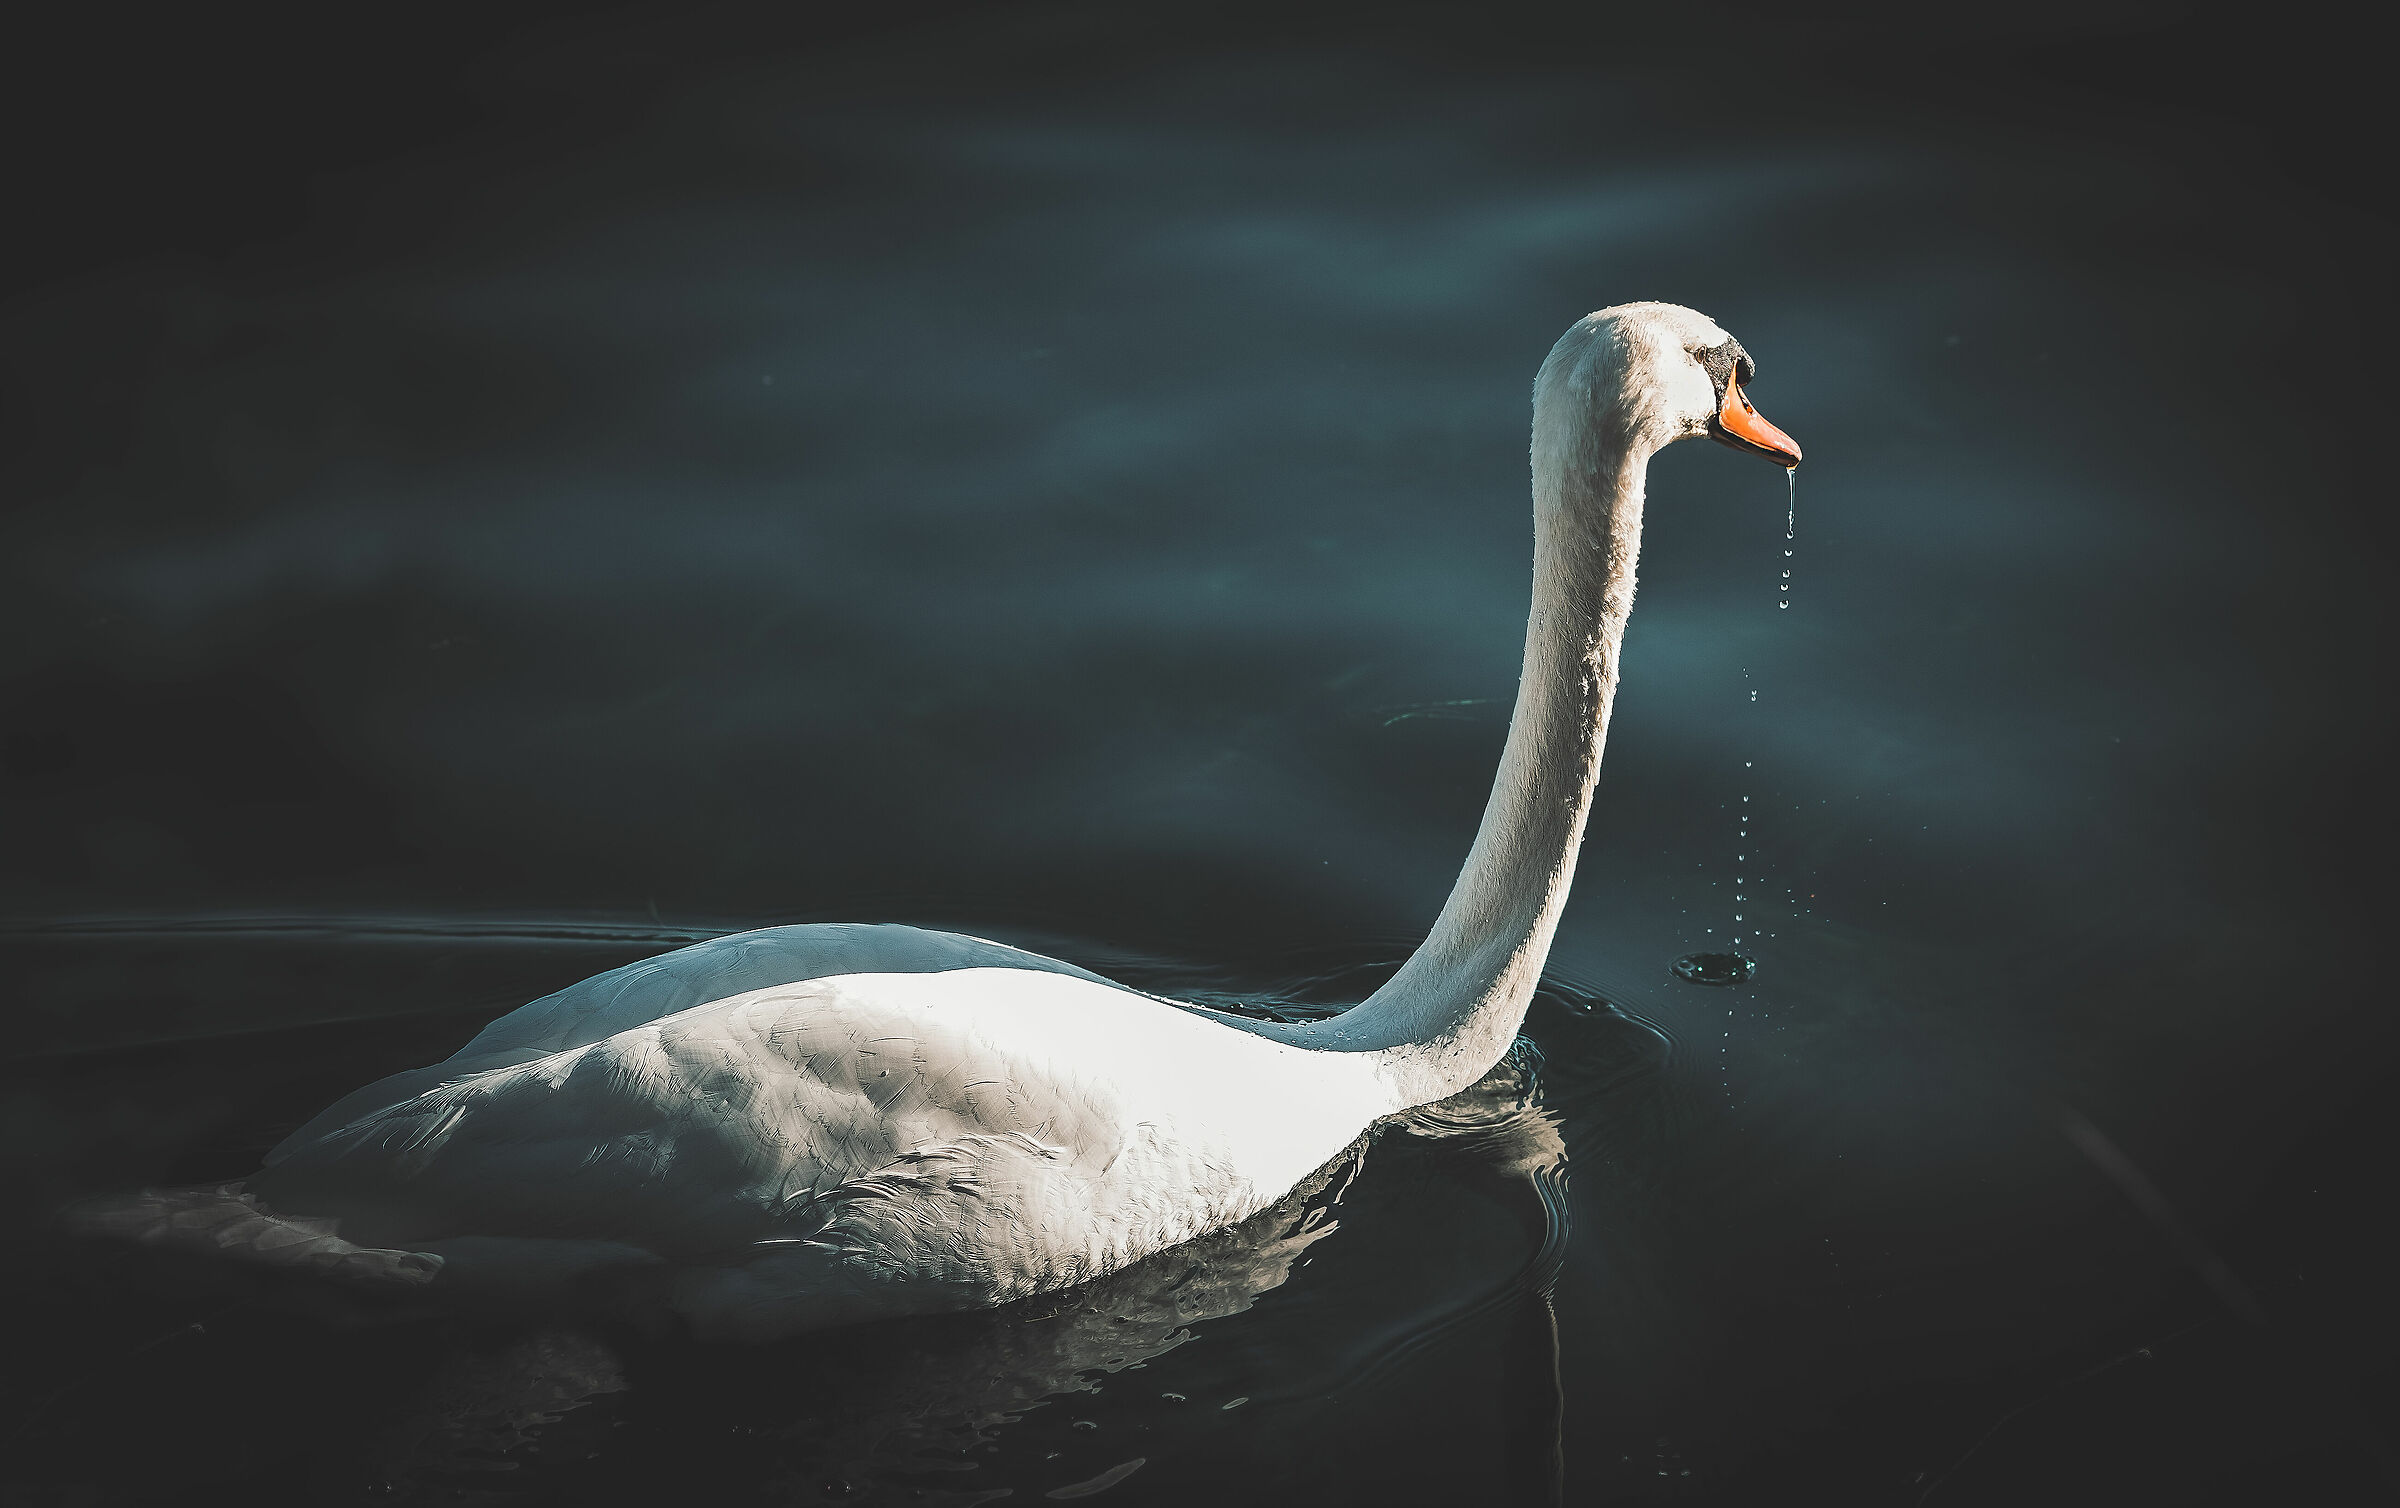 Beautiful Swan...